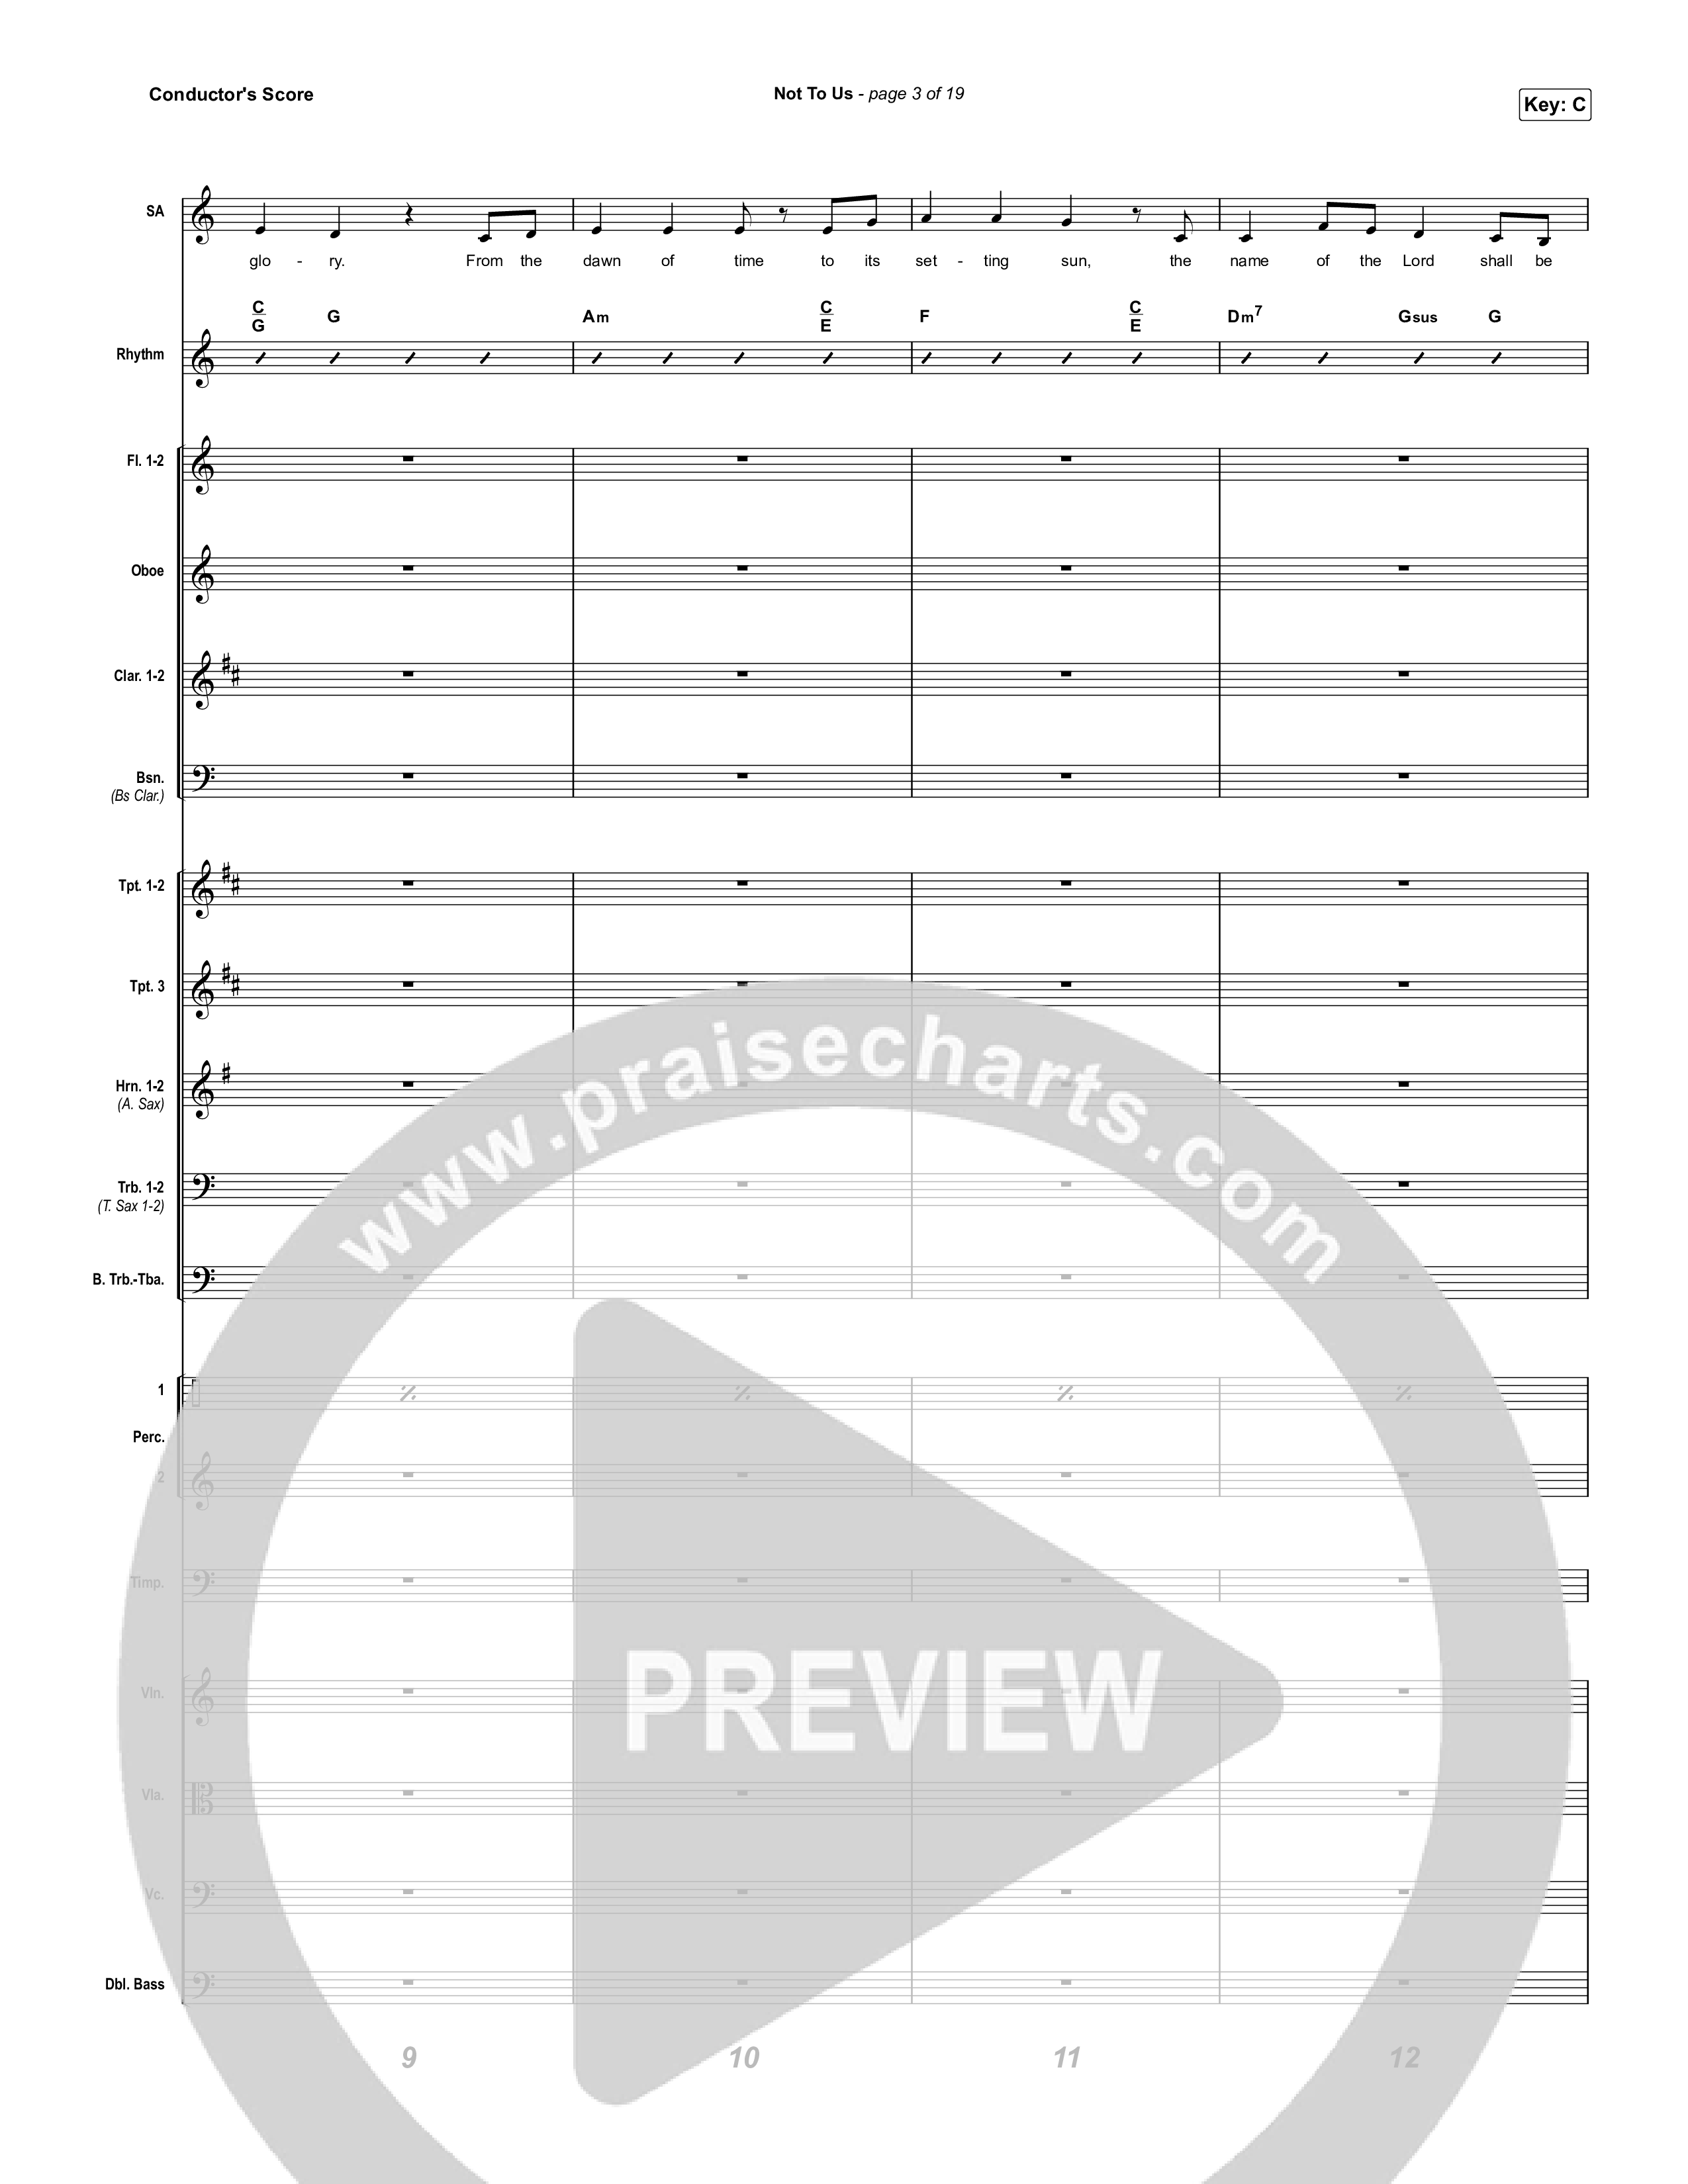 Not to Us (One Name Forever Shall Be Praised) Conductor's Score (Matt Papa / Matt Boswell / Matt Redman)